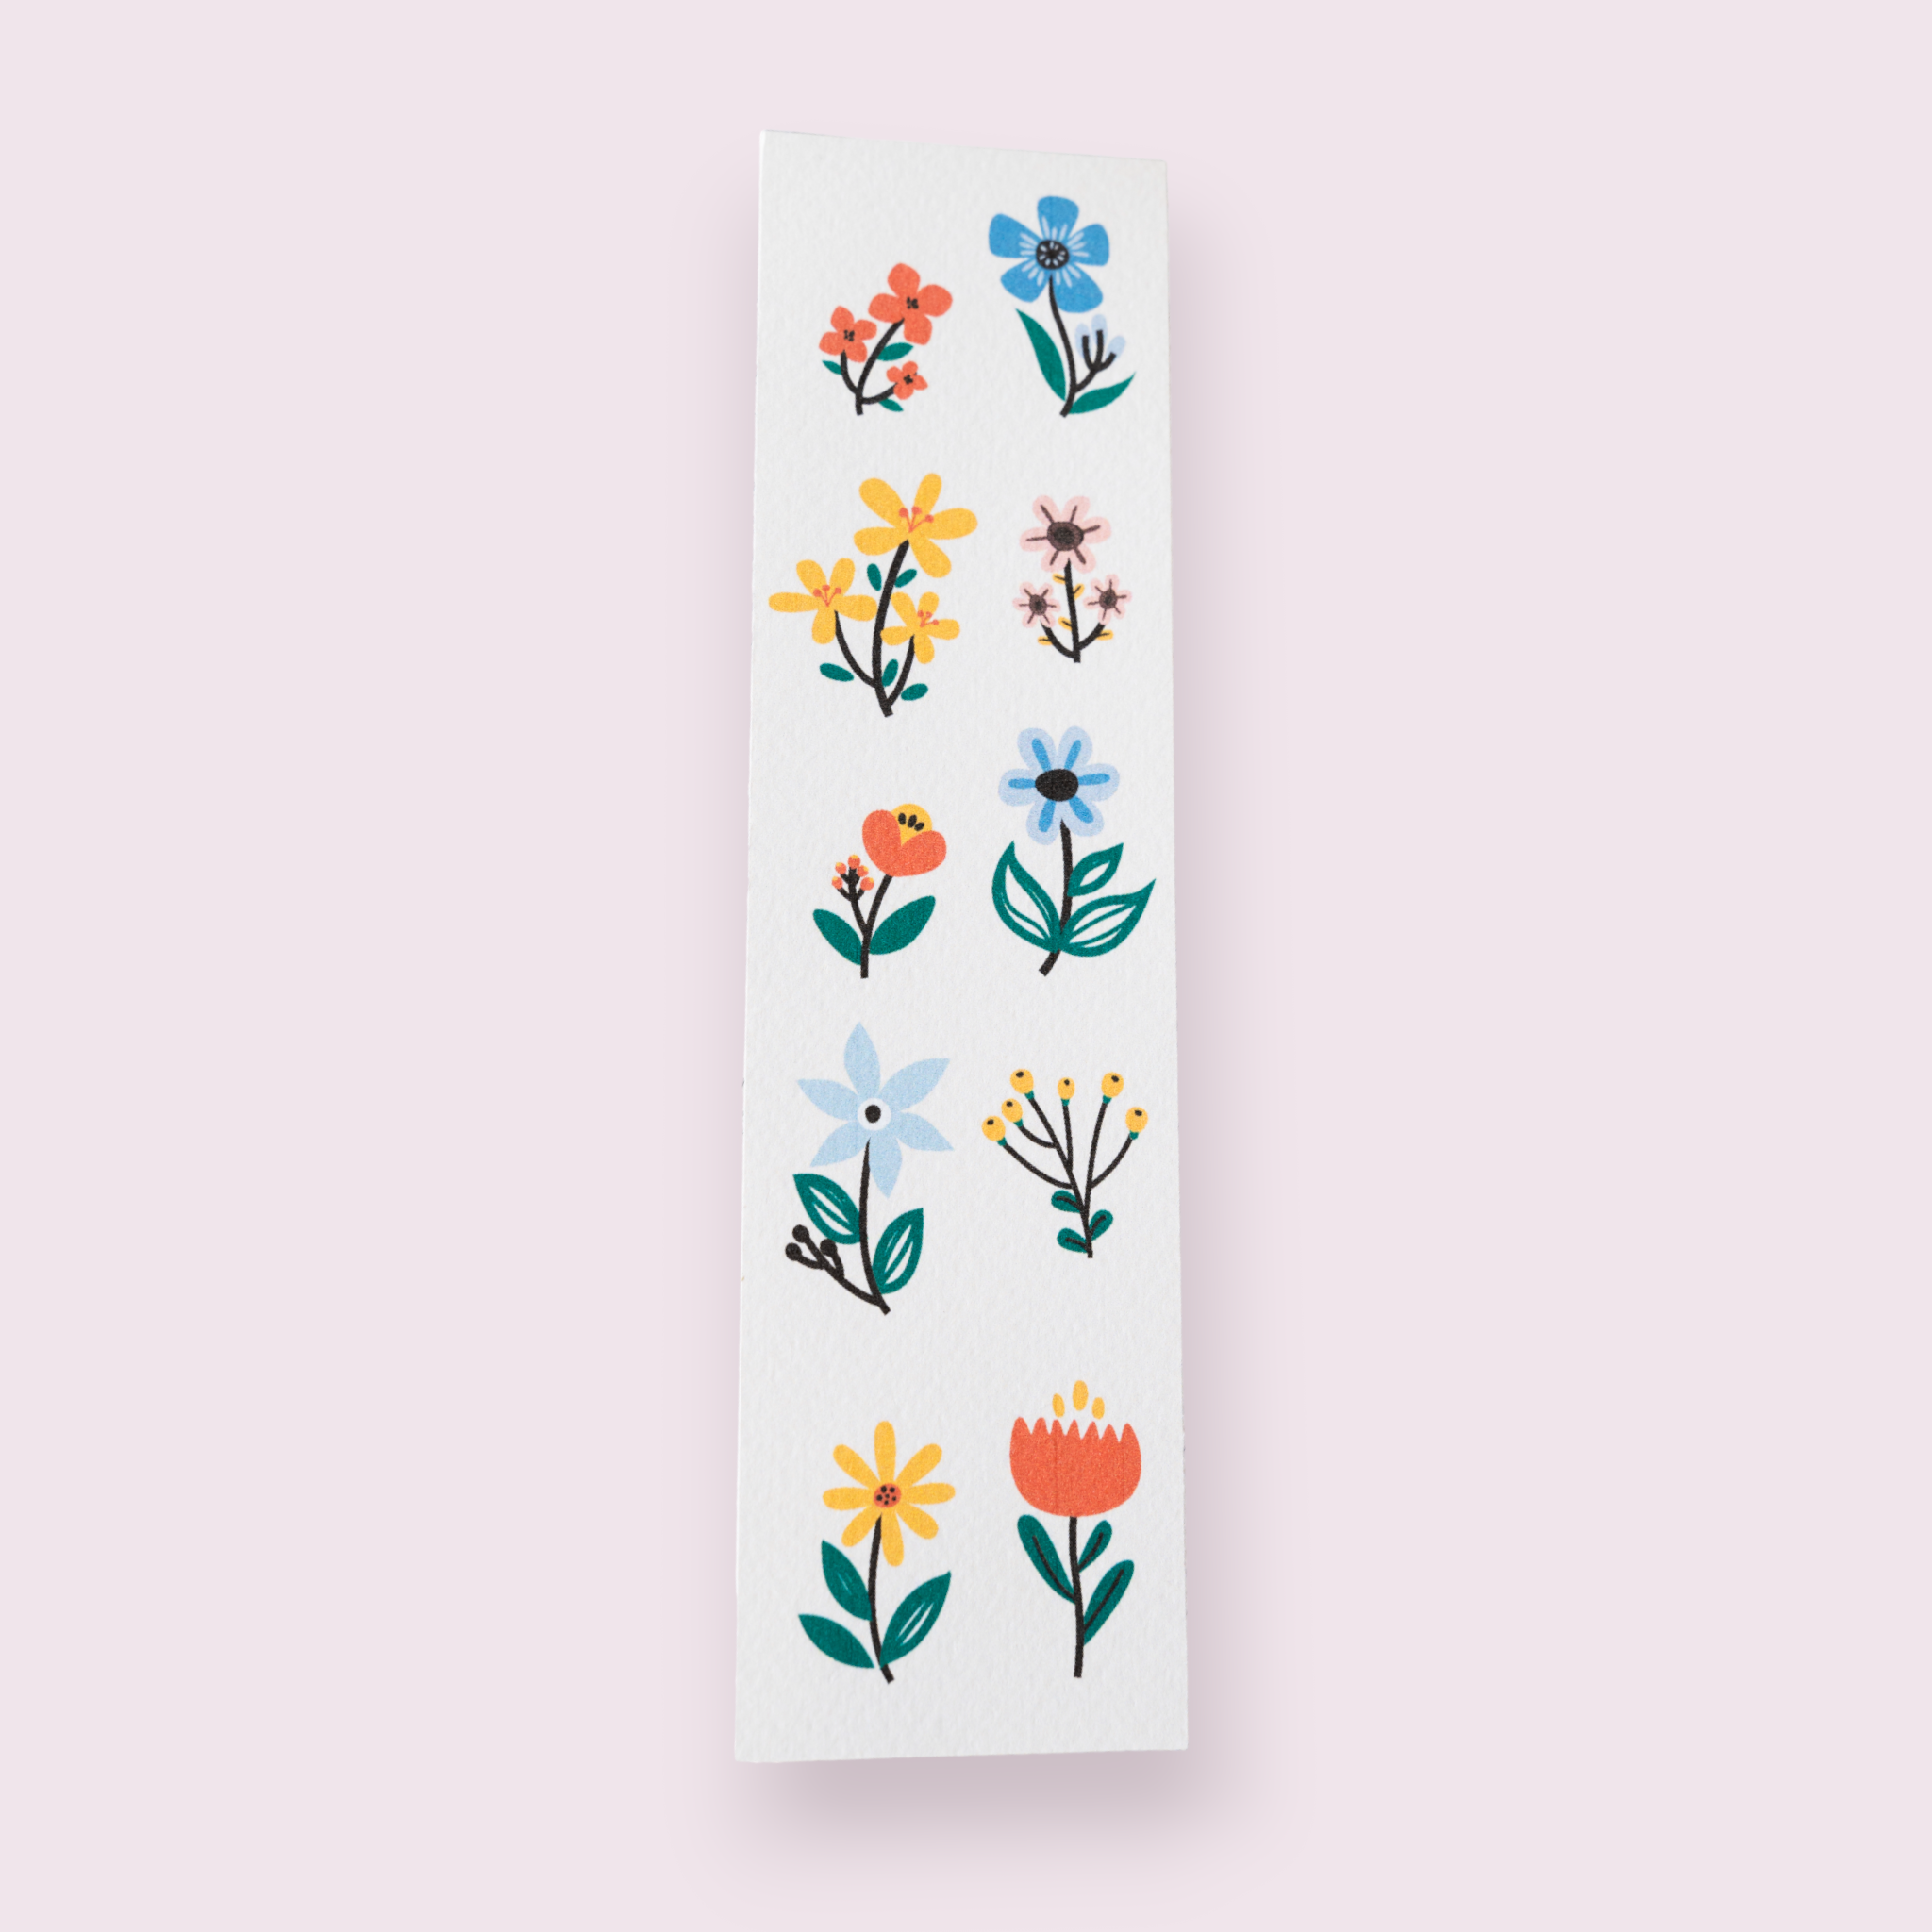 Plantable Seed Paper Bookmark Large - Letterpress – plantableseedpaper